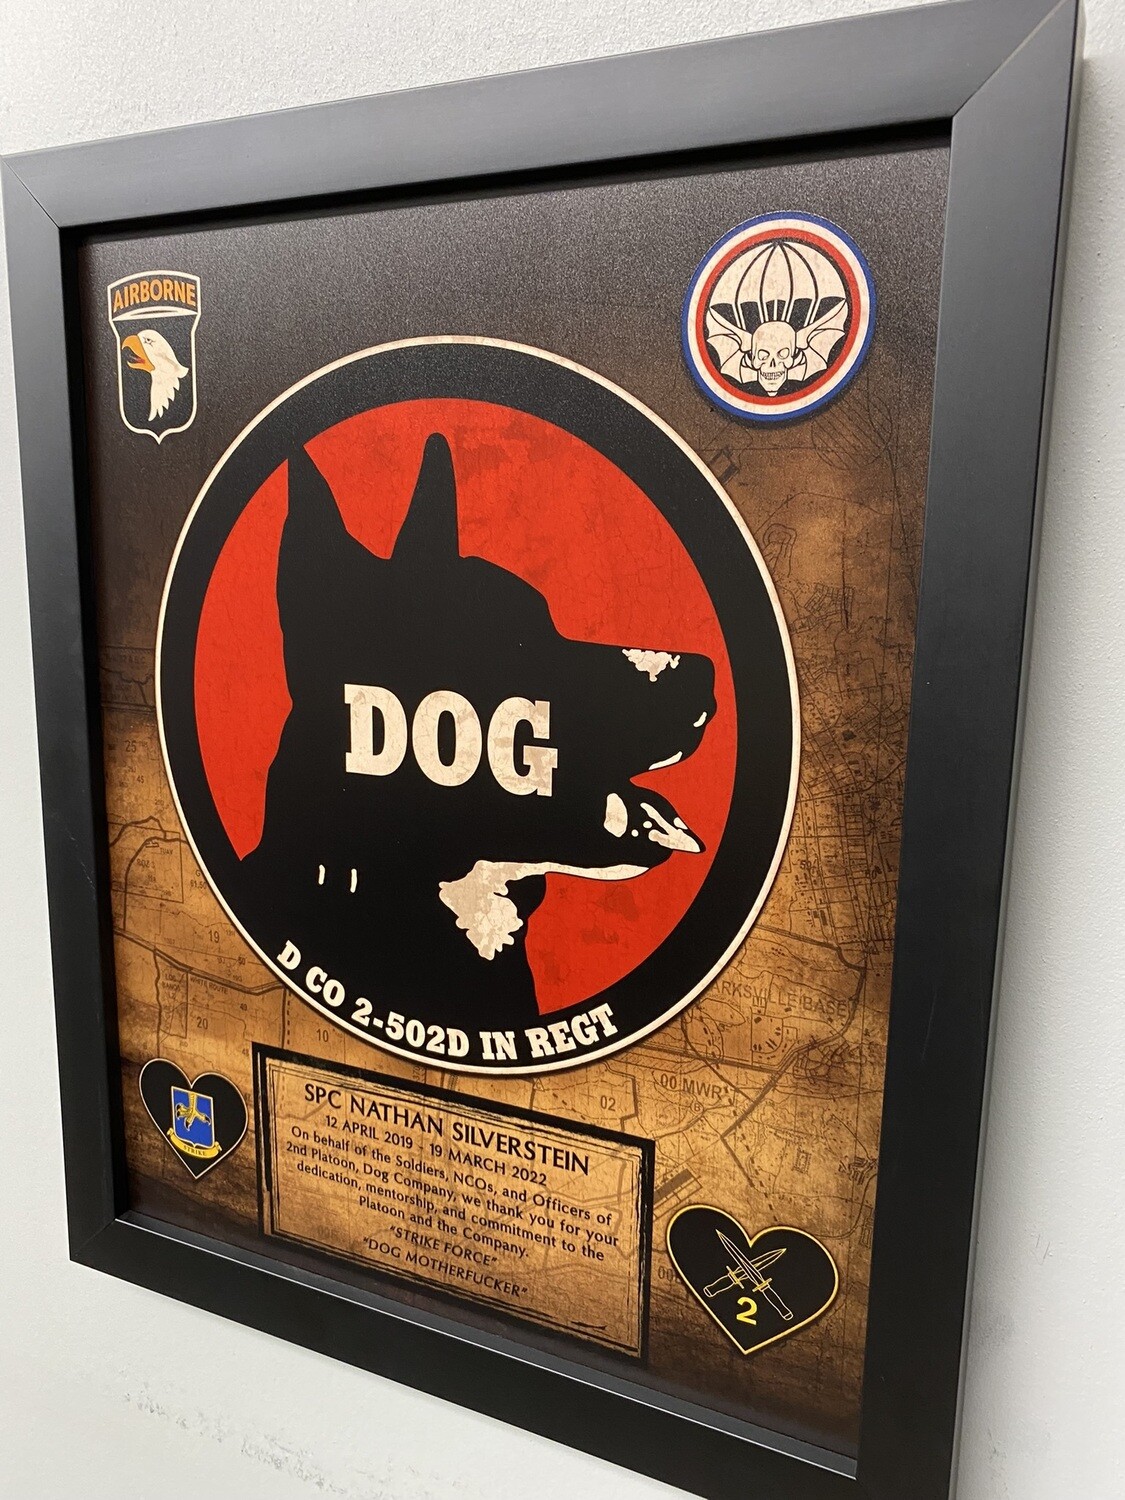 DOG Company 2-502D  Plaque - 12.5"x10.5"